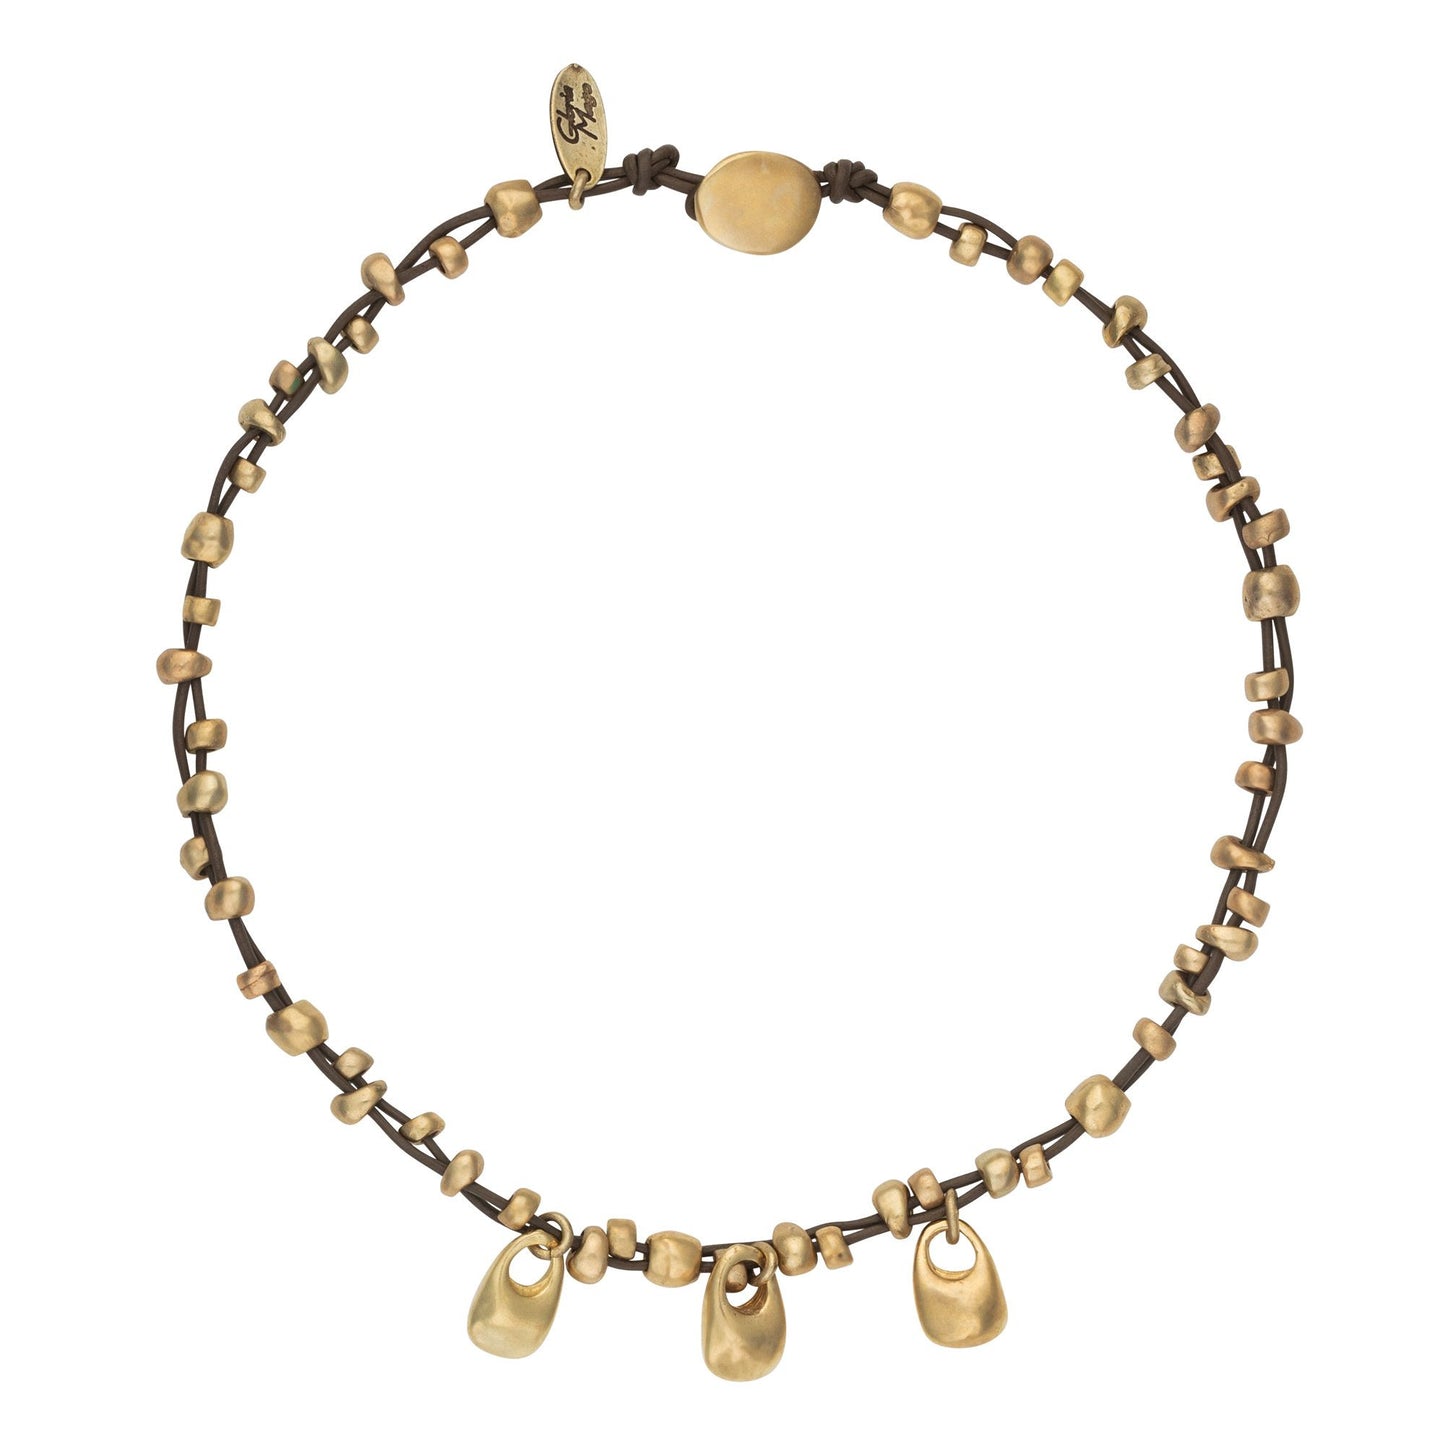 Leather necklace with golden teardrop pendants, 40cm long